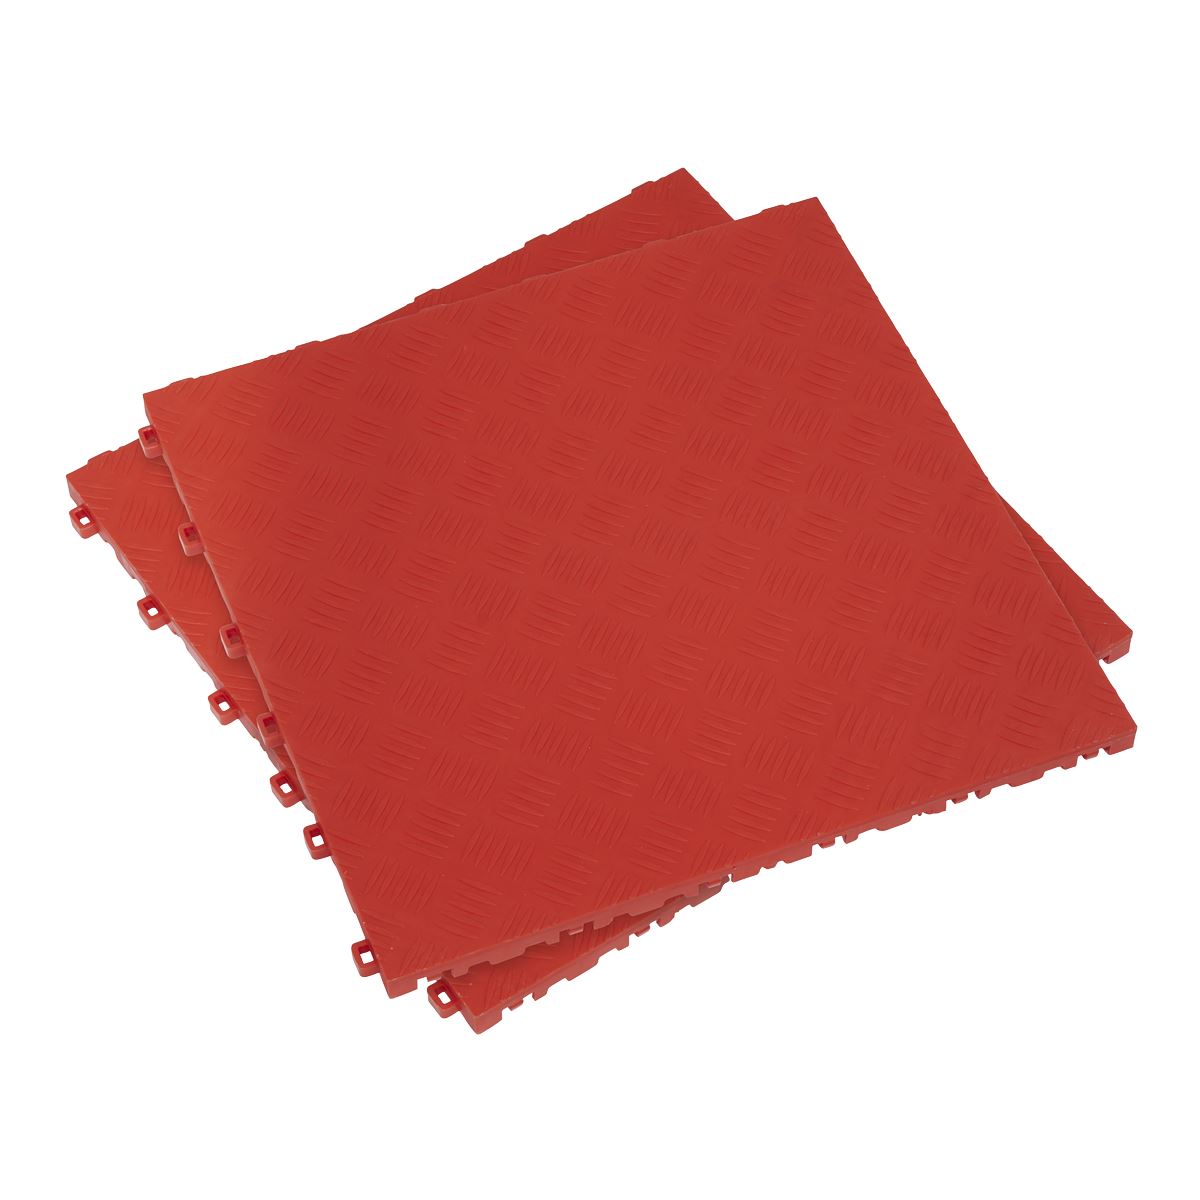 Sealey Polypropylene Floor Tile 400 x 400mm - Red Treadplate - Pack of 9